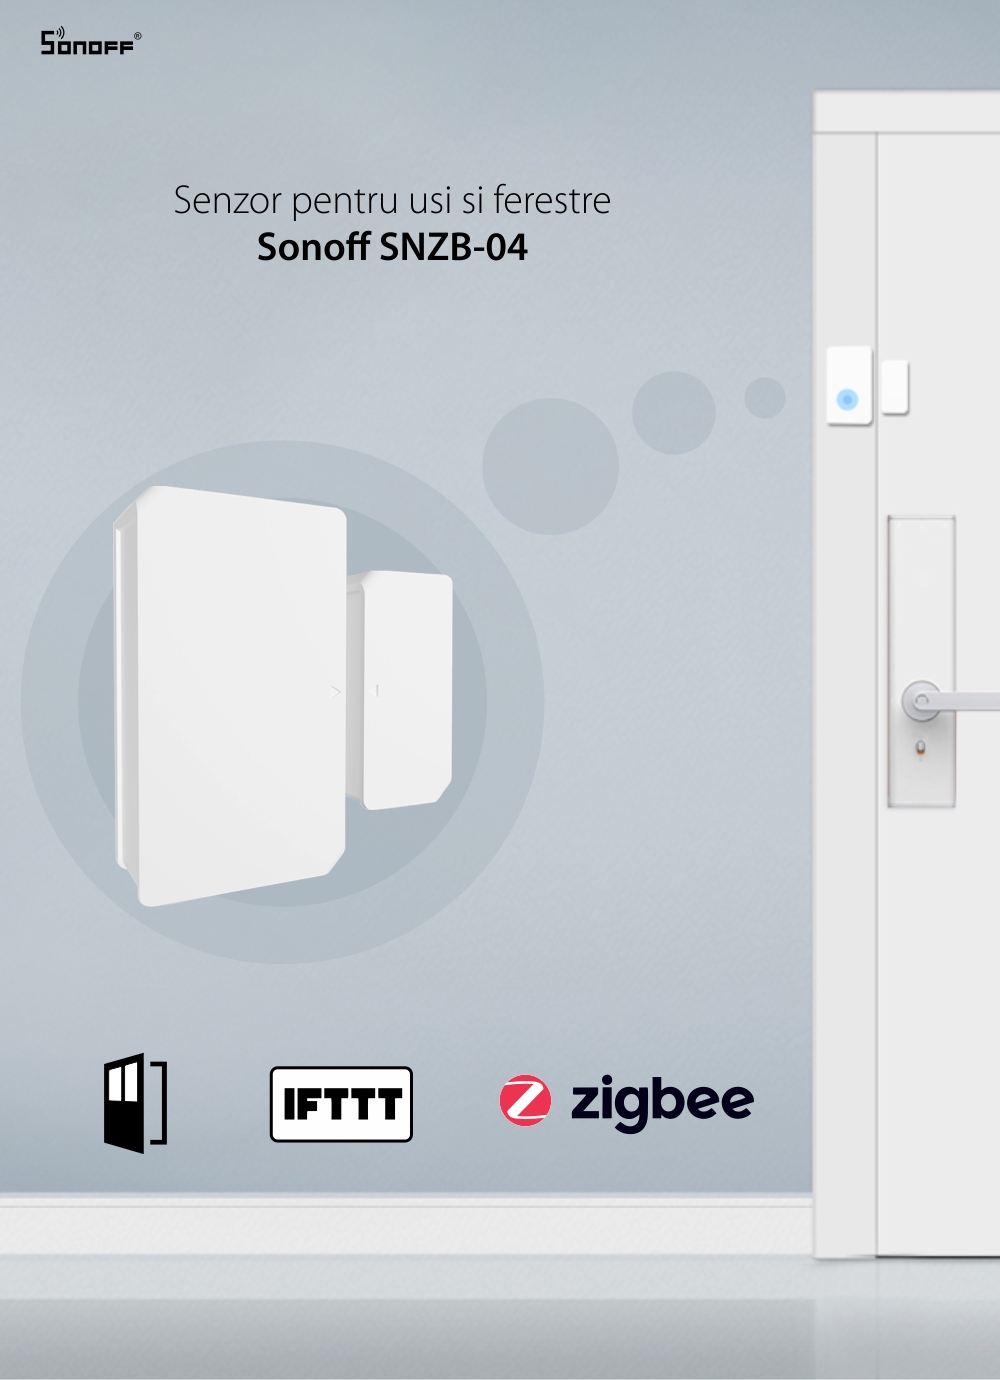 Senzor pentru usi si ferestre Sonoff SNZB-04, Wi-Fi, Protocol ZigBee, Notificari aplicatie